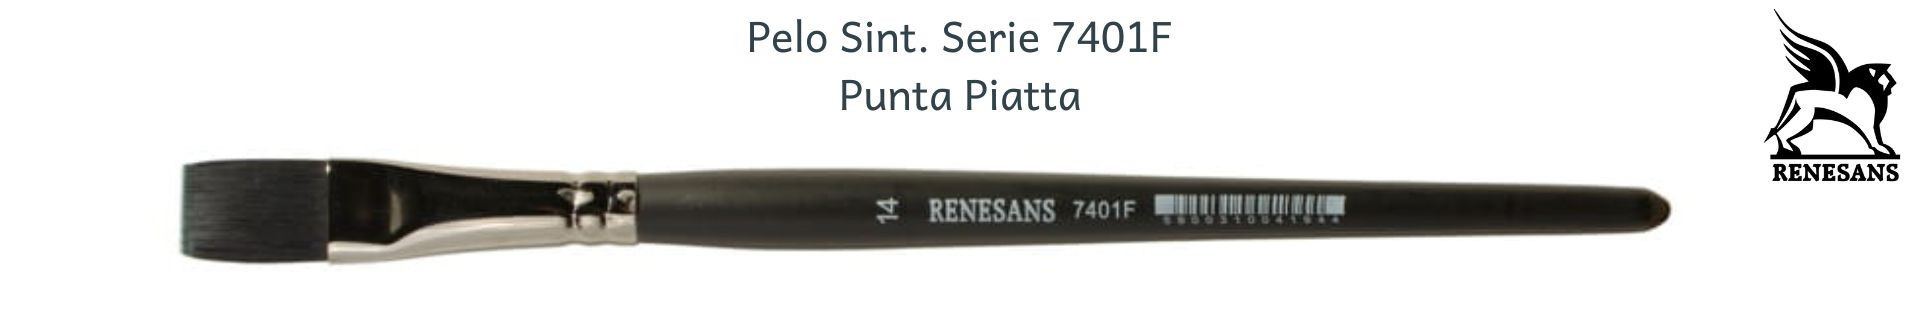 Renesans Serie 7401F Piatti